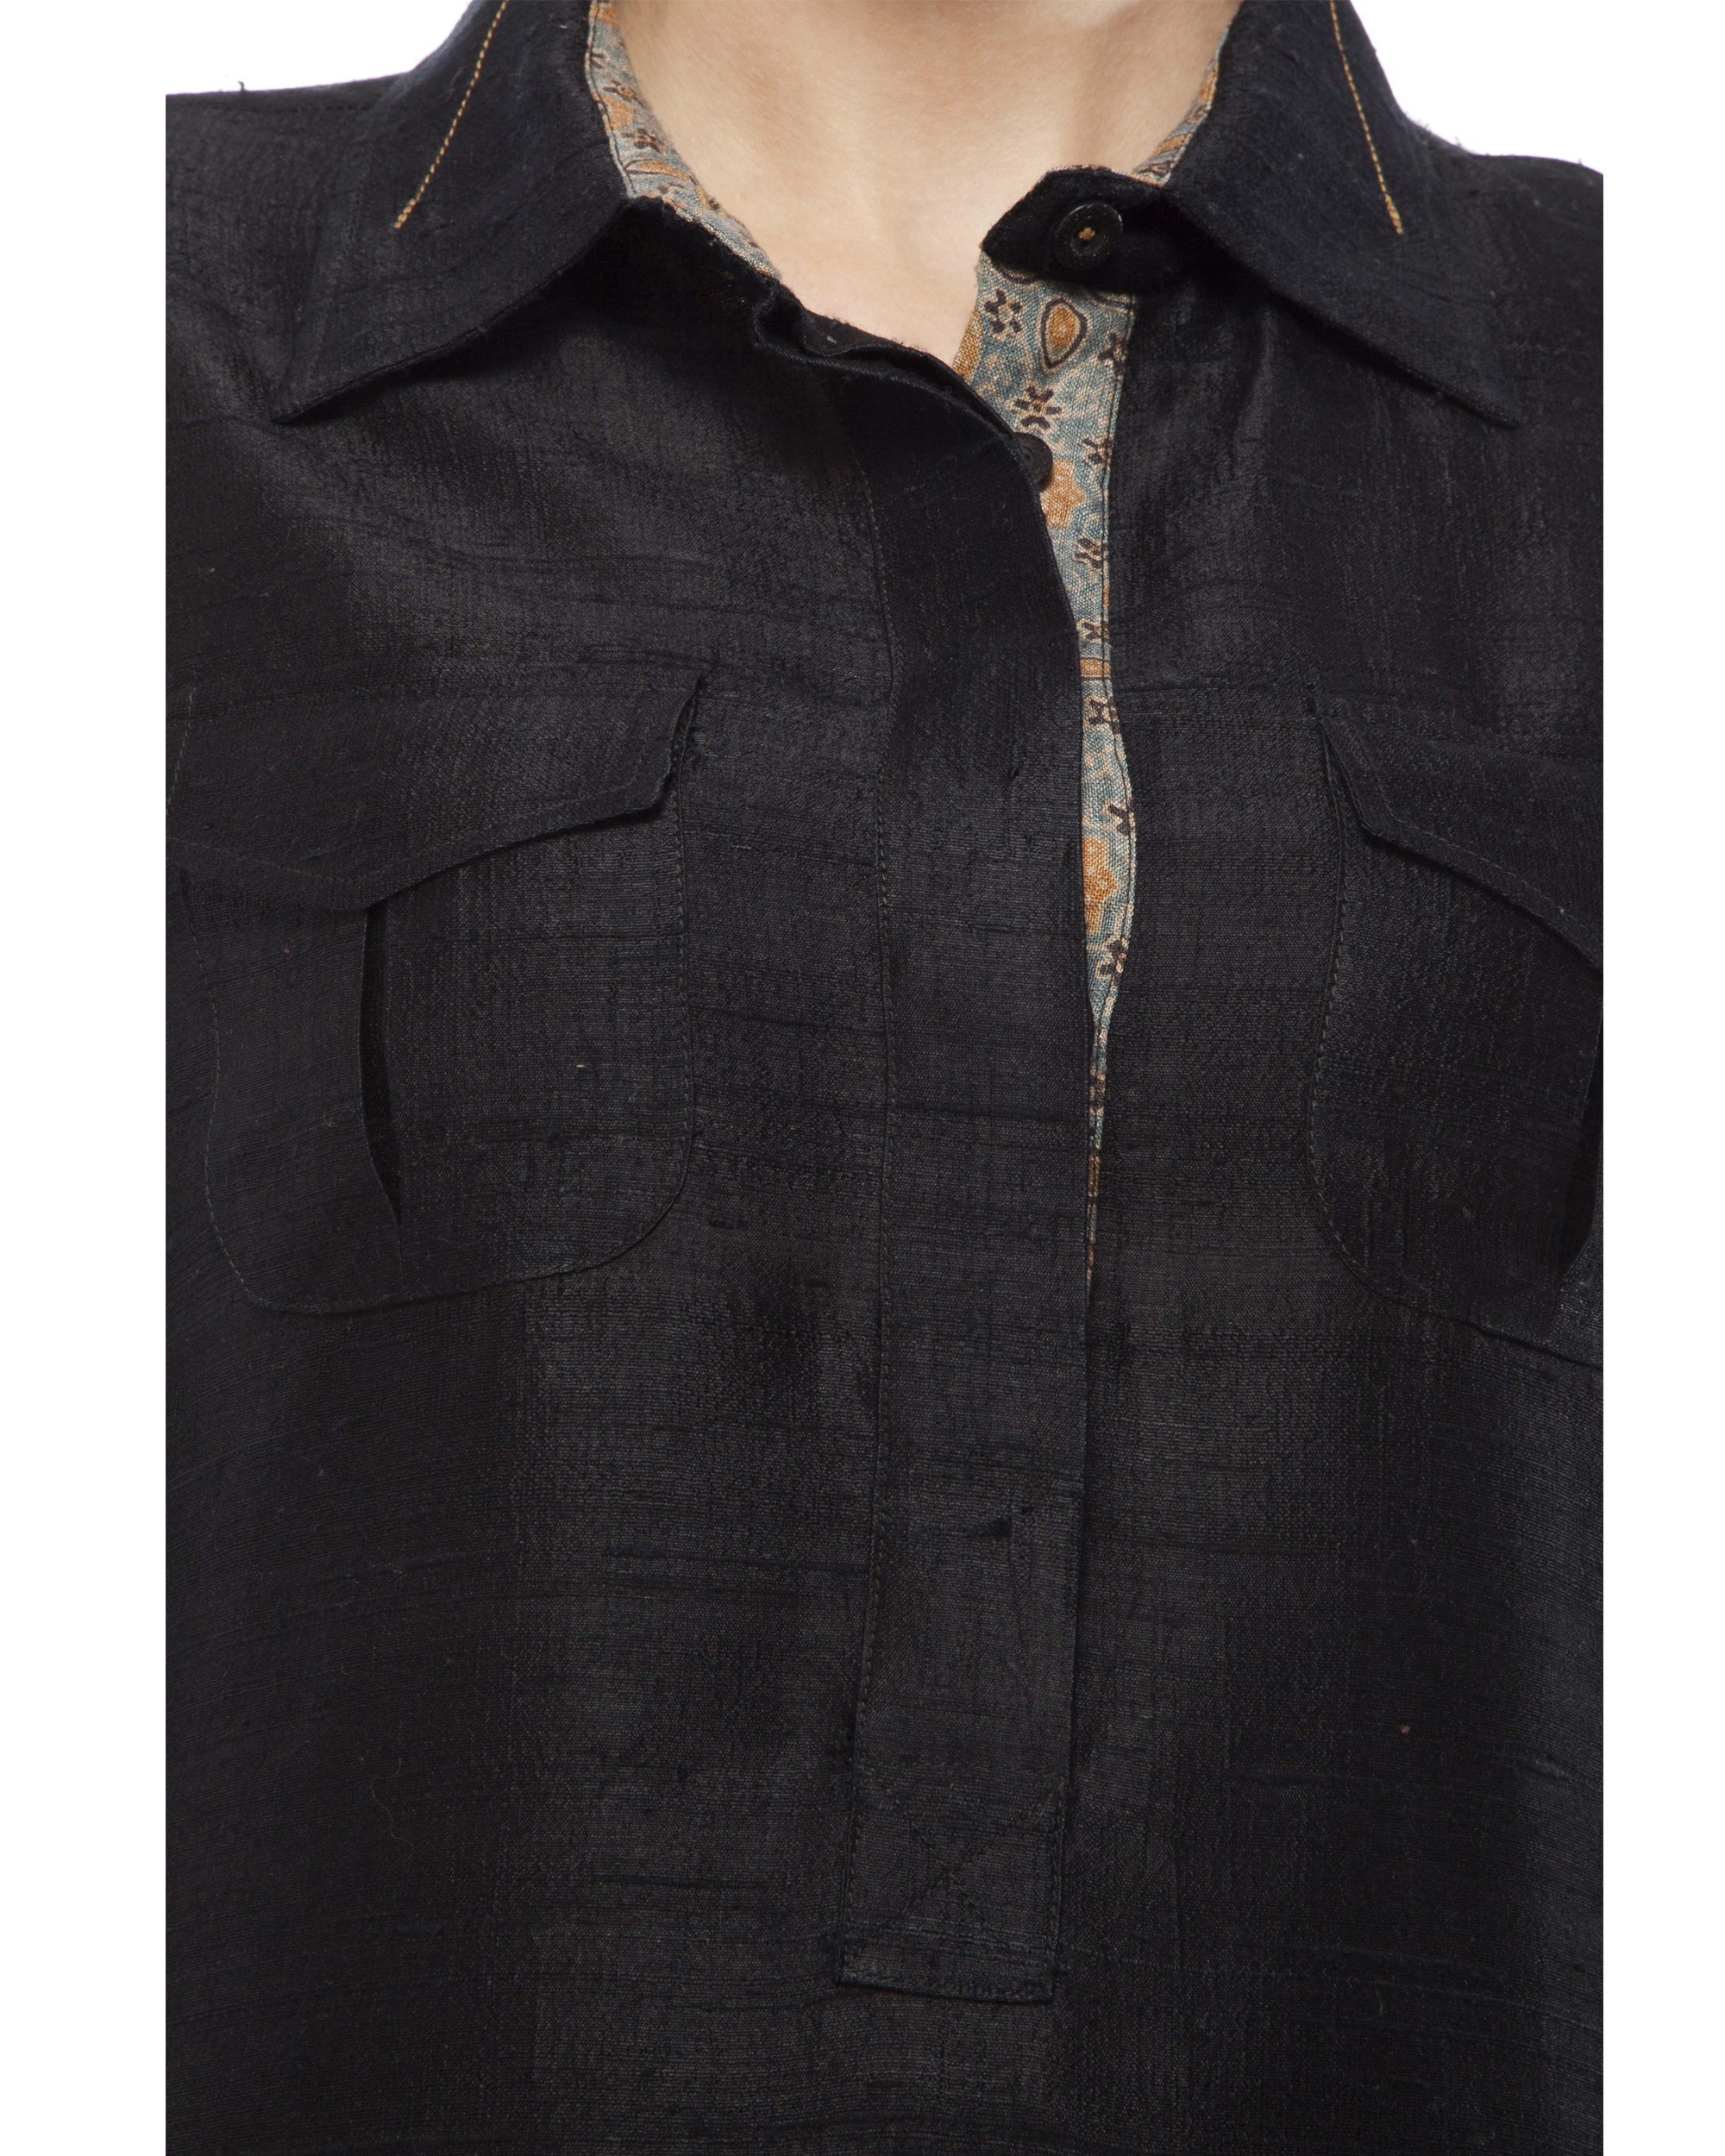 Black tunic with ajrakh detailing by Divyam Mehta | The Secret Label